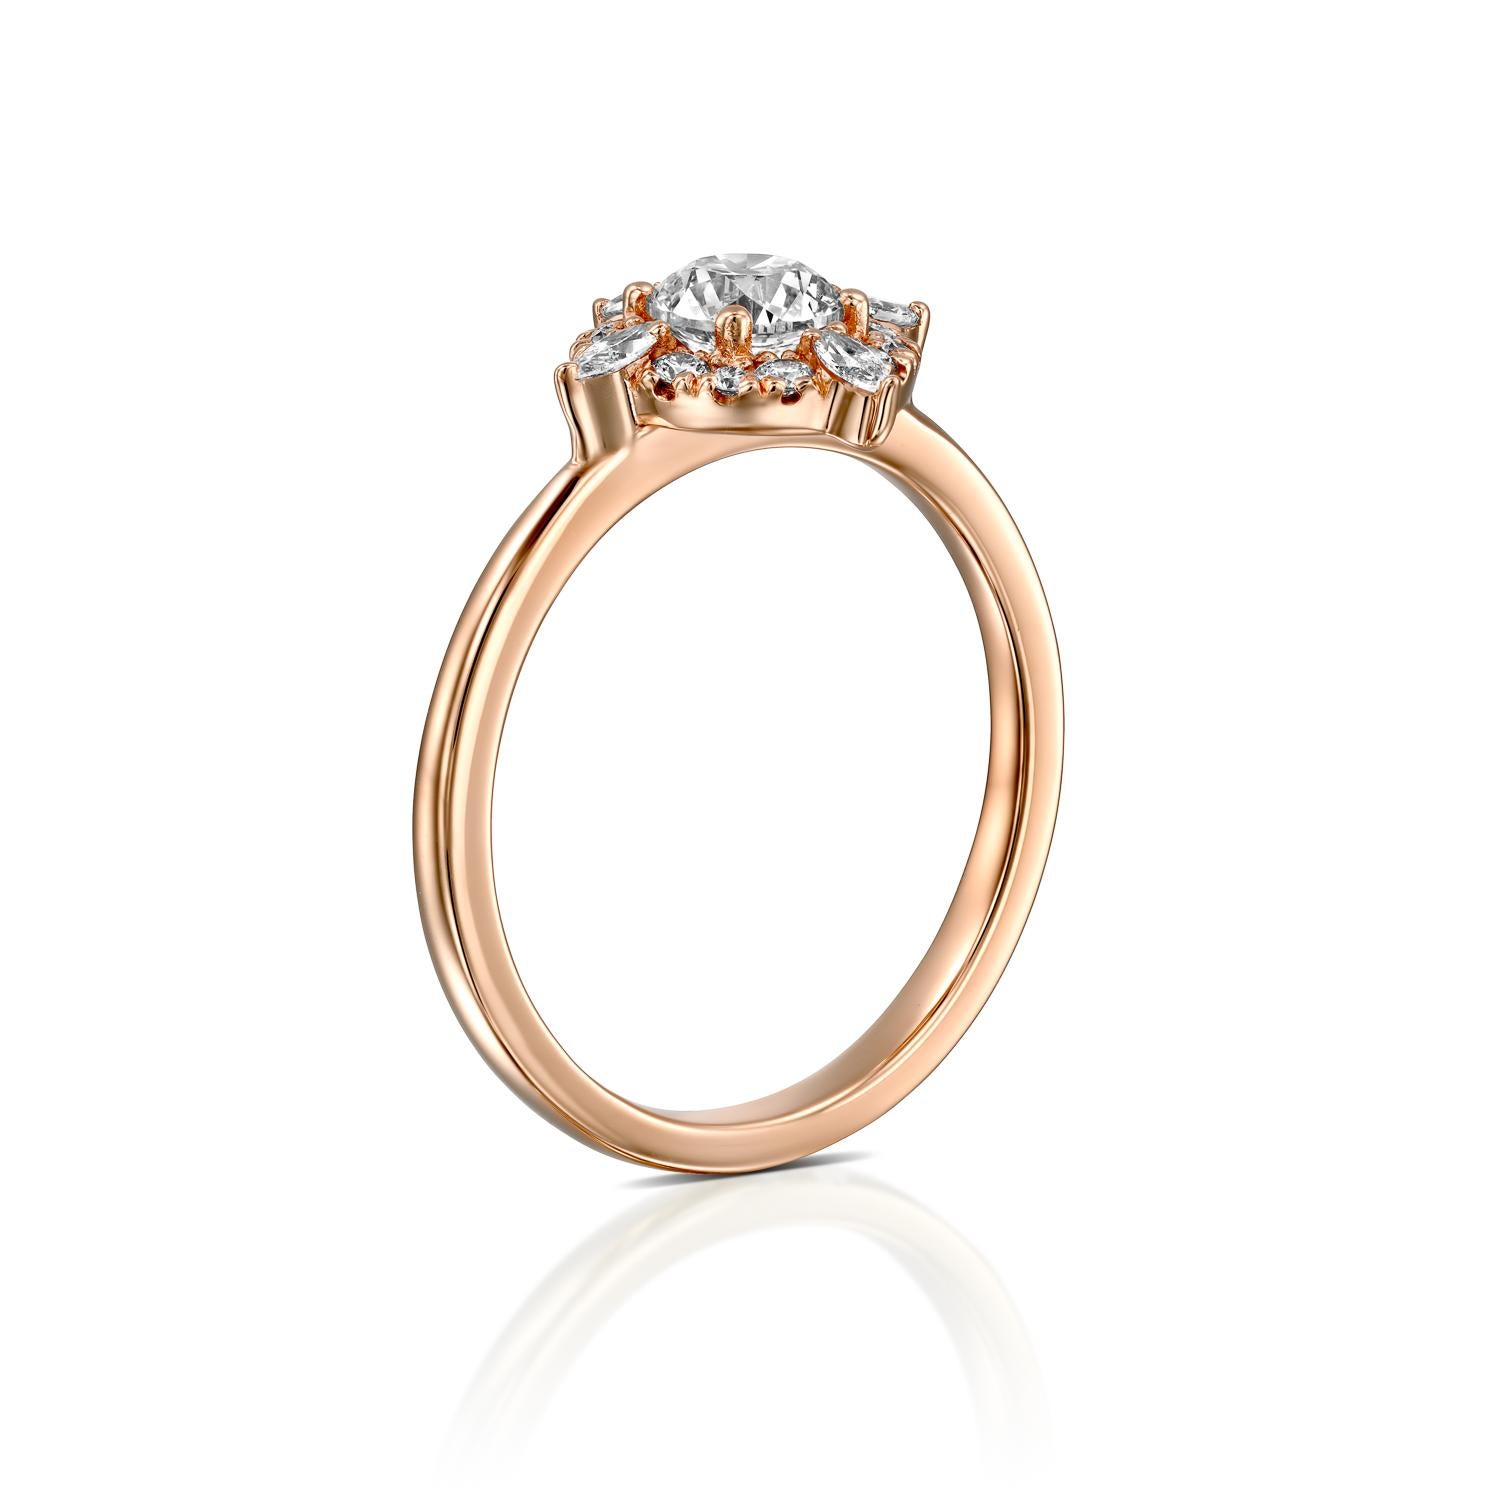 1/4 carat engagement rings